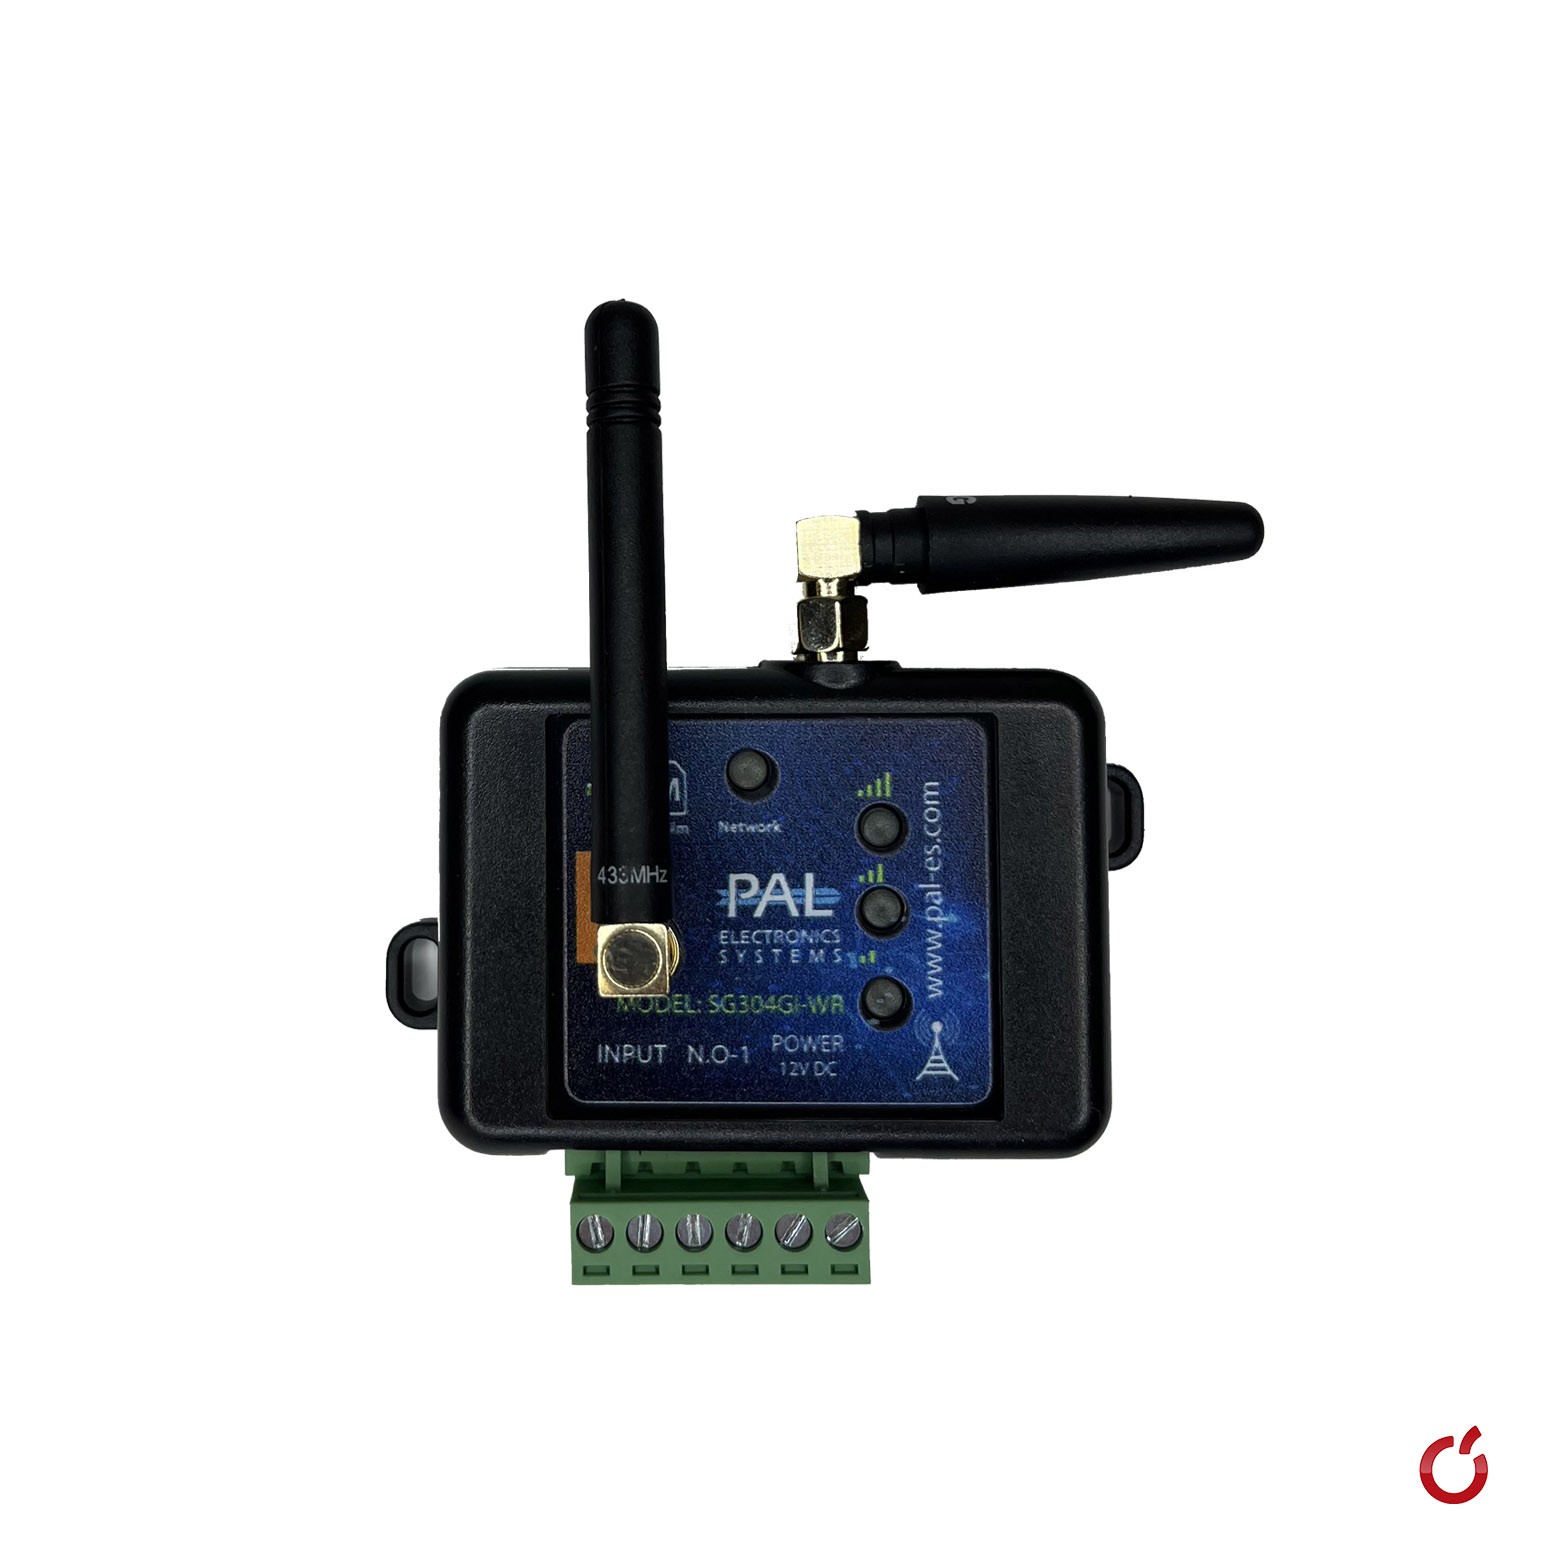 Pal-es SG304GI-WR GSM-контроллер